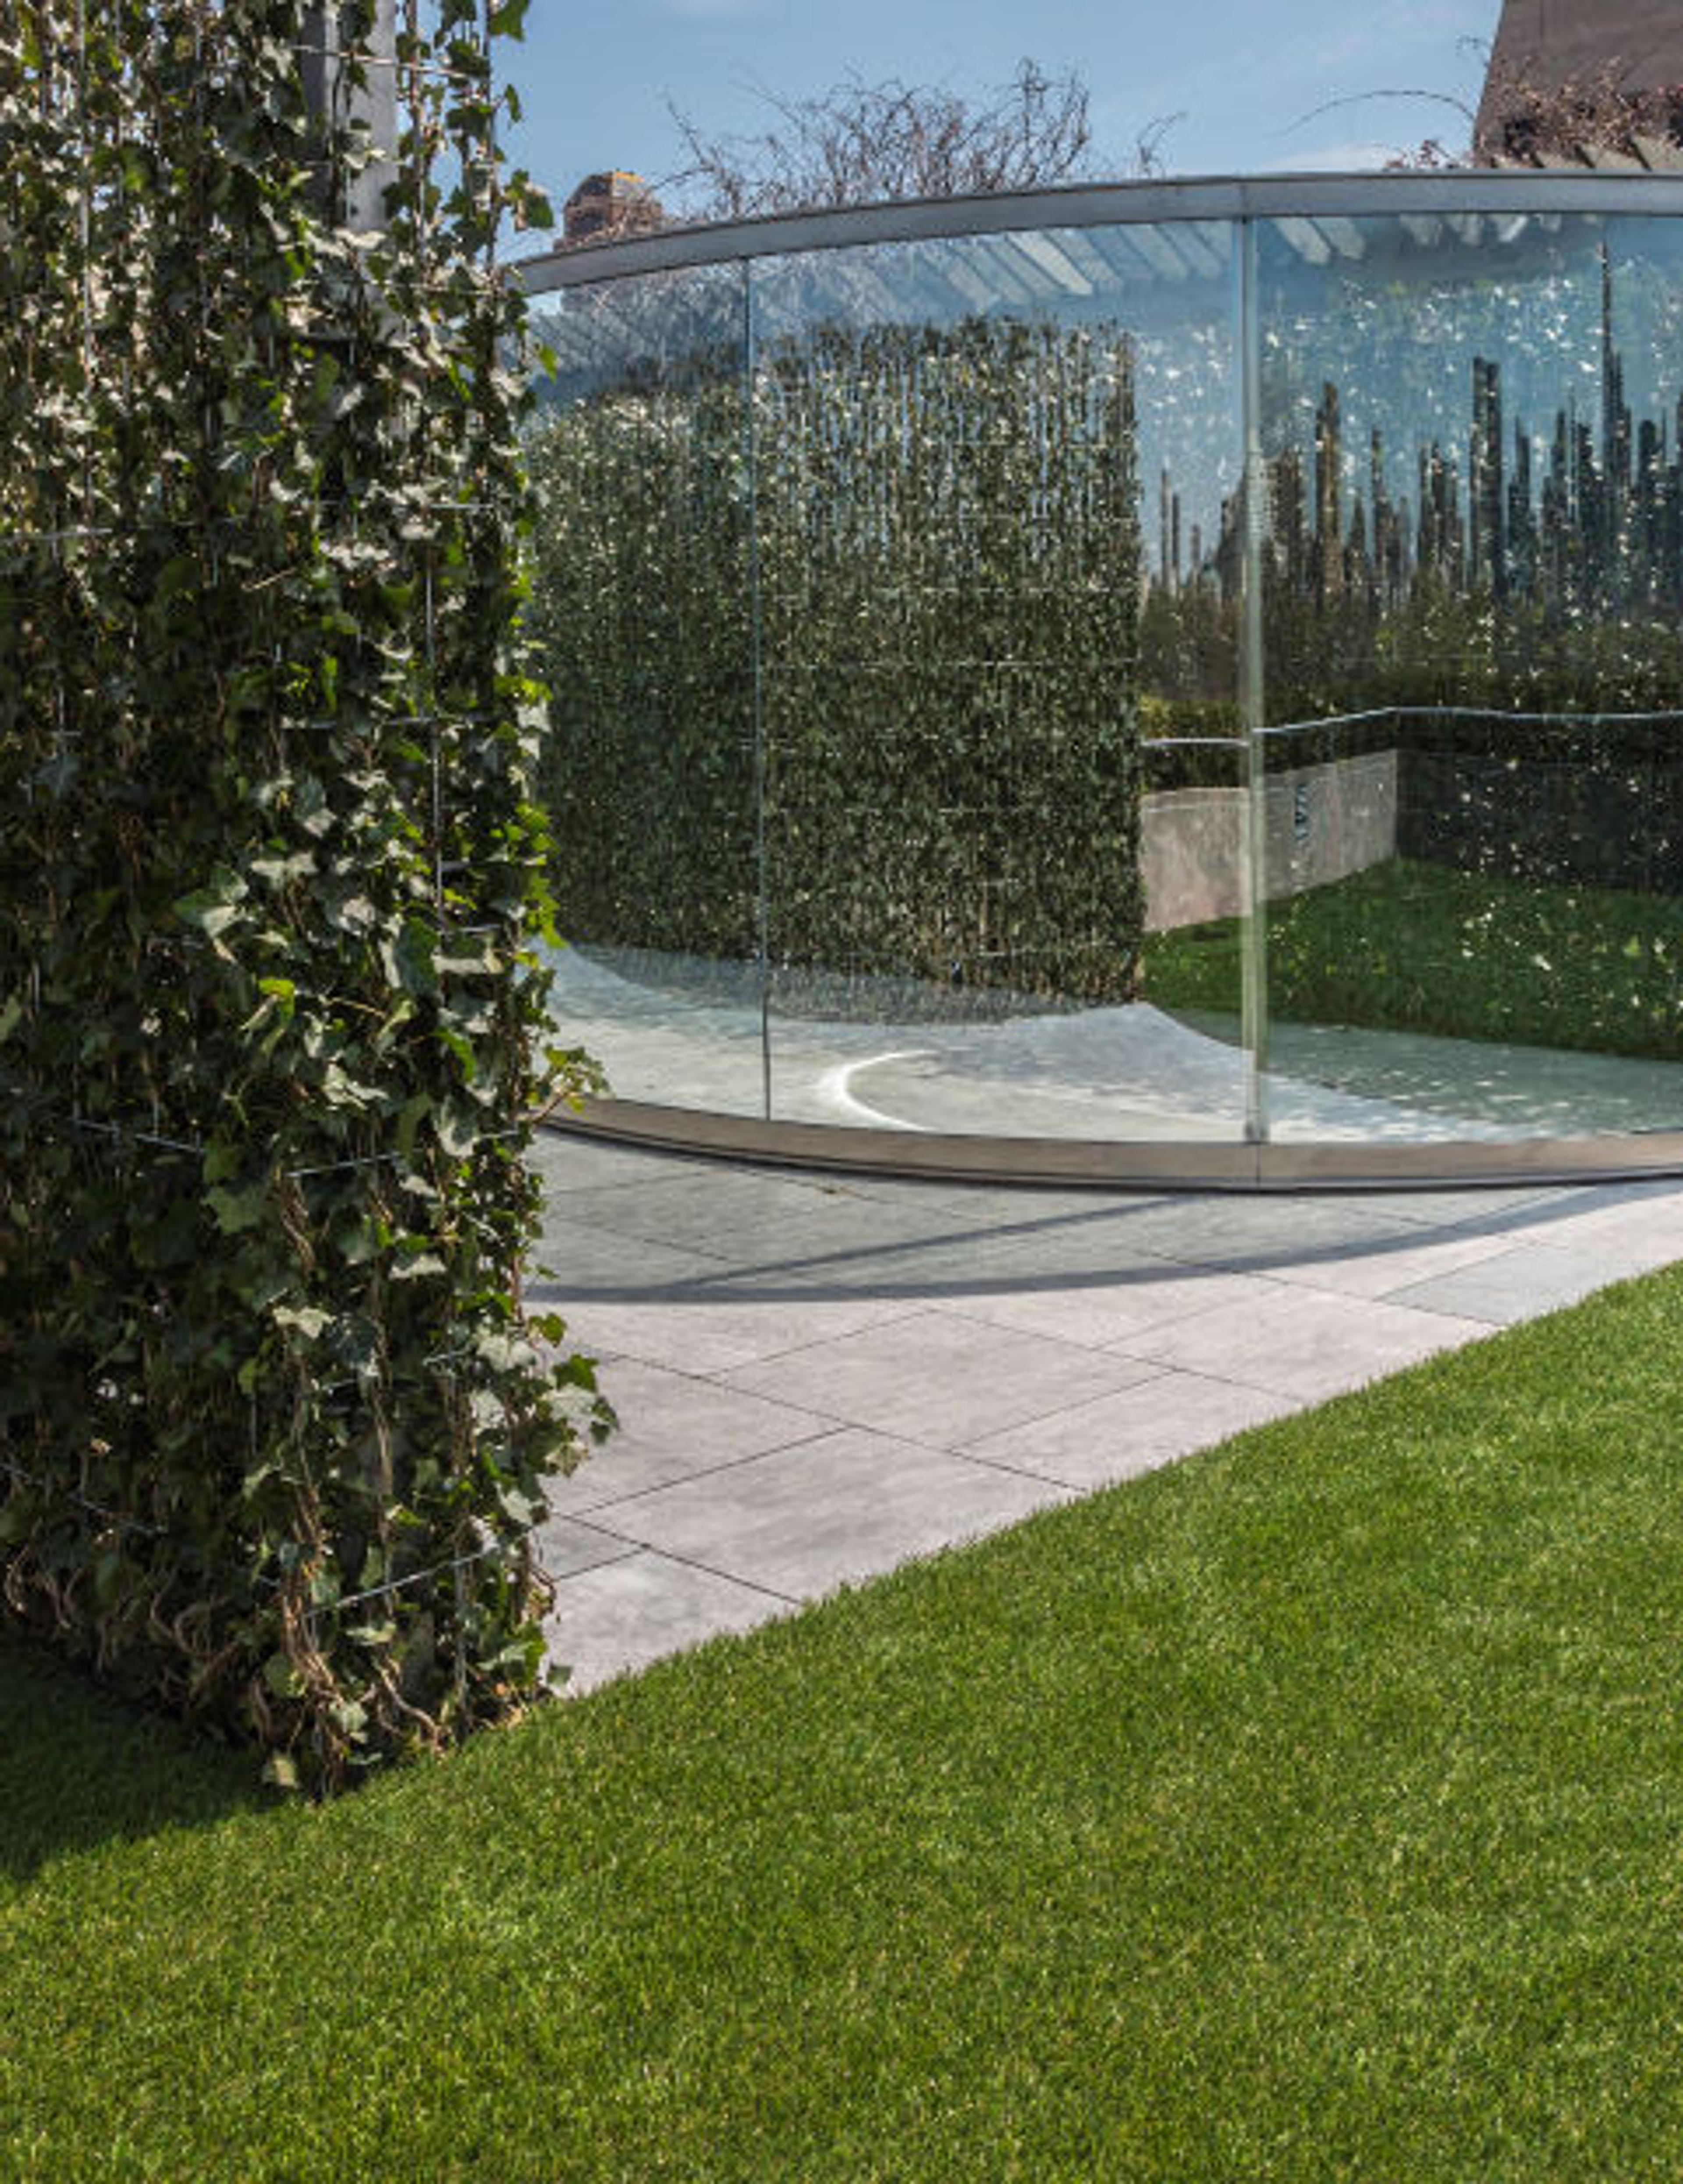 Dan Graham (b. 1942, Urbana, Illinois). Installation view of Hedge Two-Way Mirror Walkabout, 2014